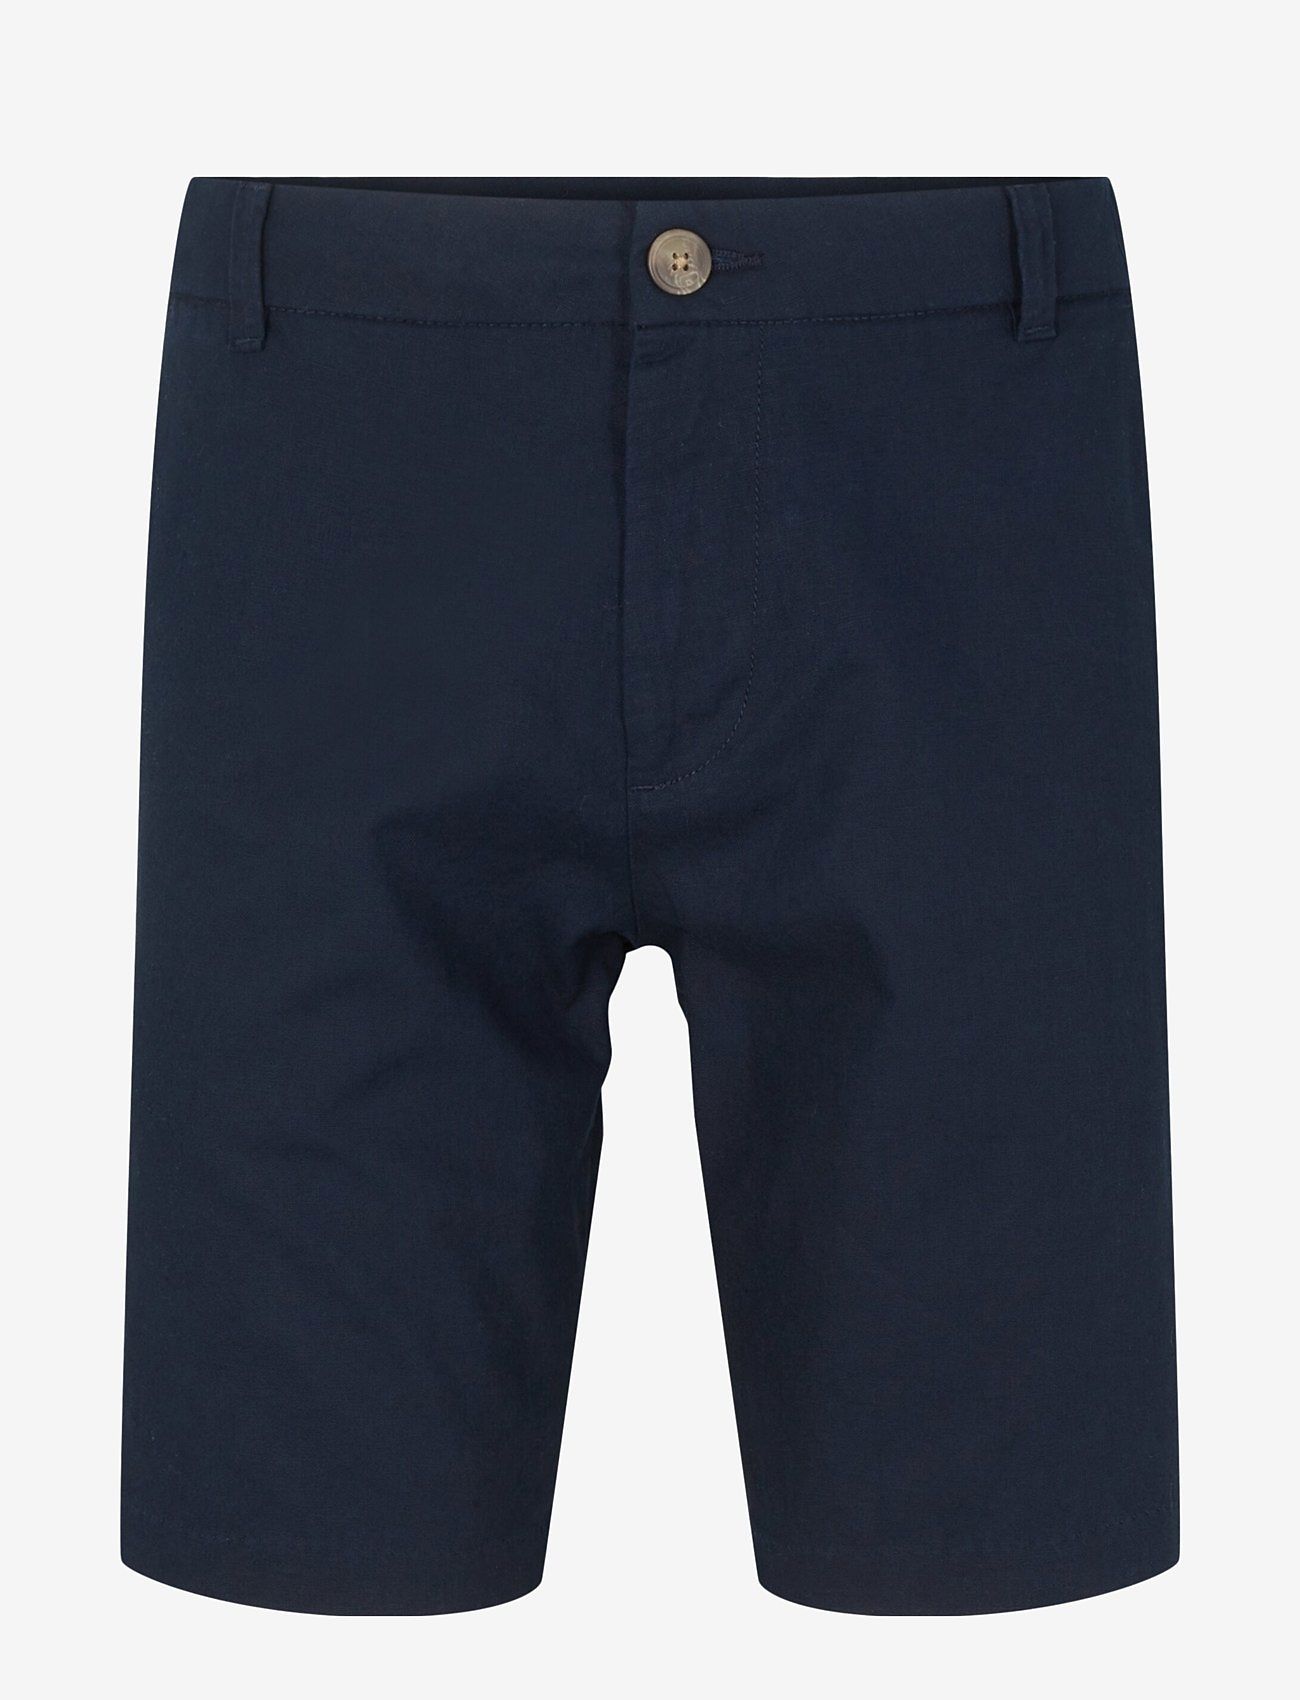 Tom Tailor - regular cotton linen shorts - sky captain blue - 0